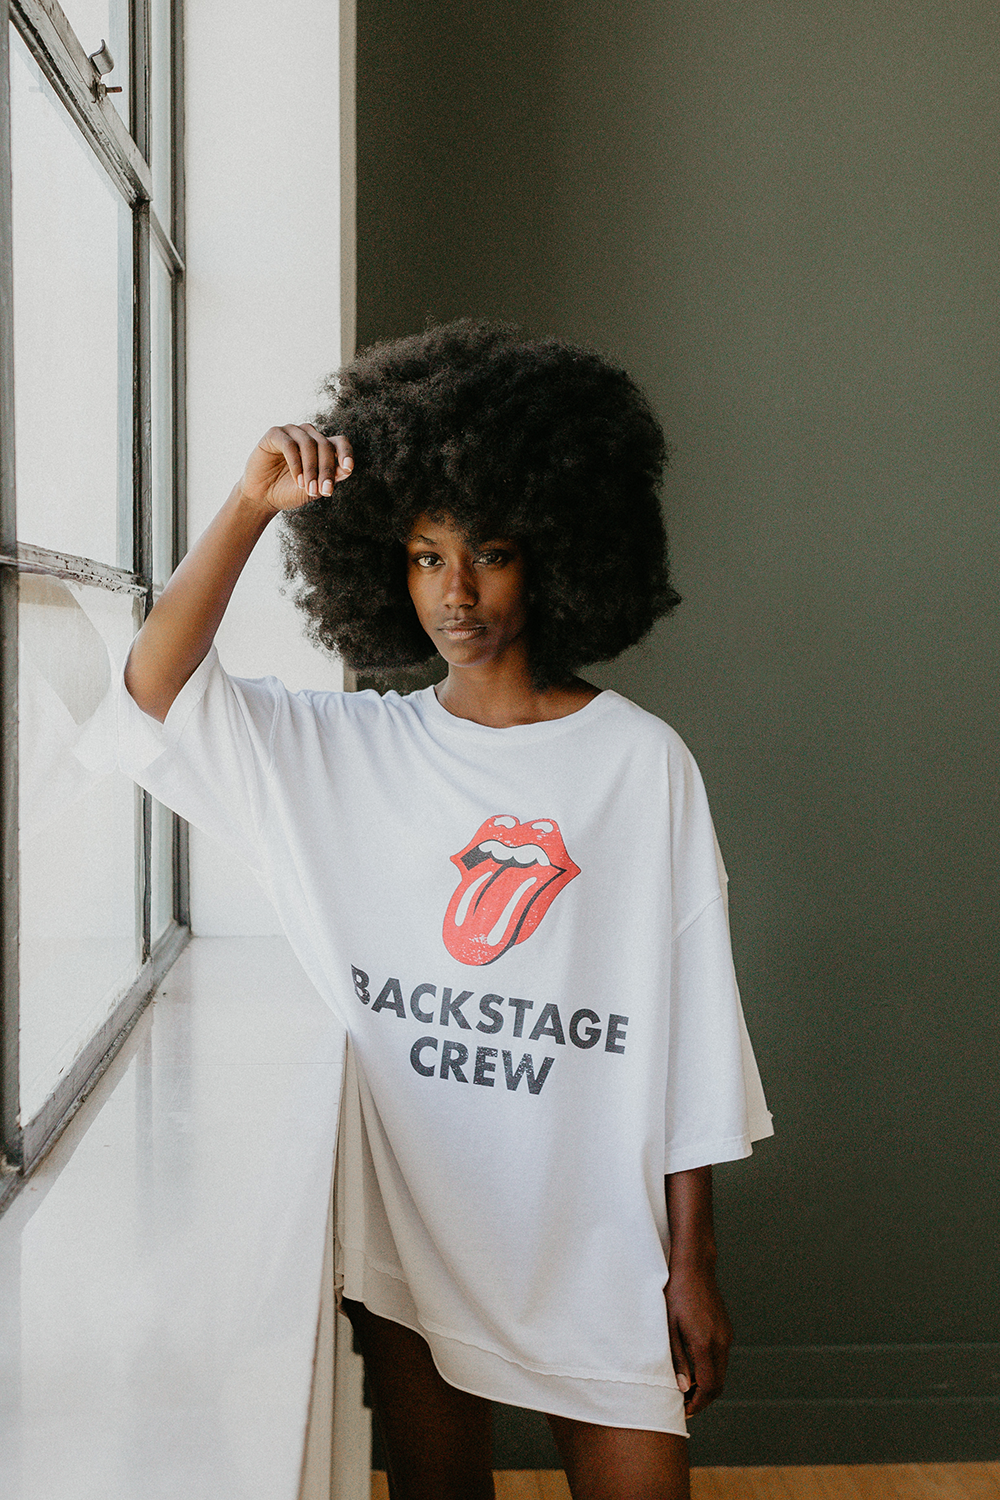 Rolling Stones Backstage Crew Oversized Tee